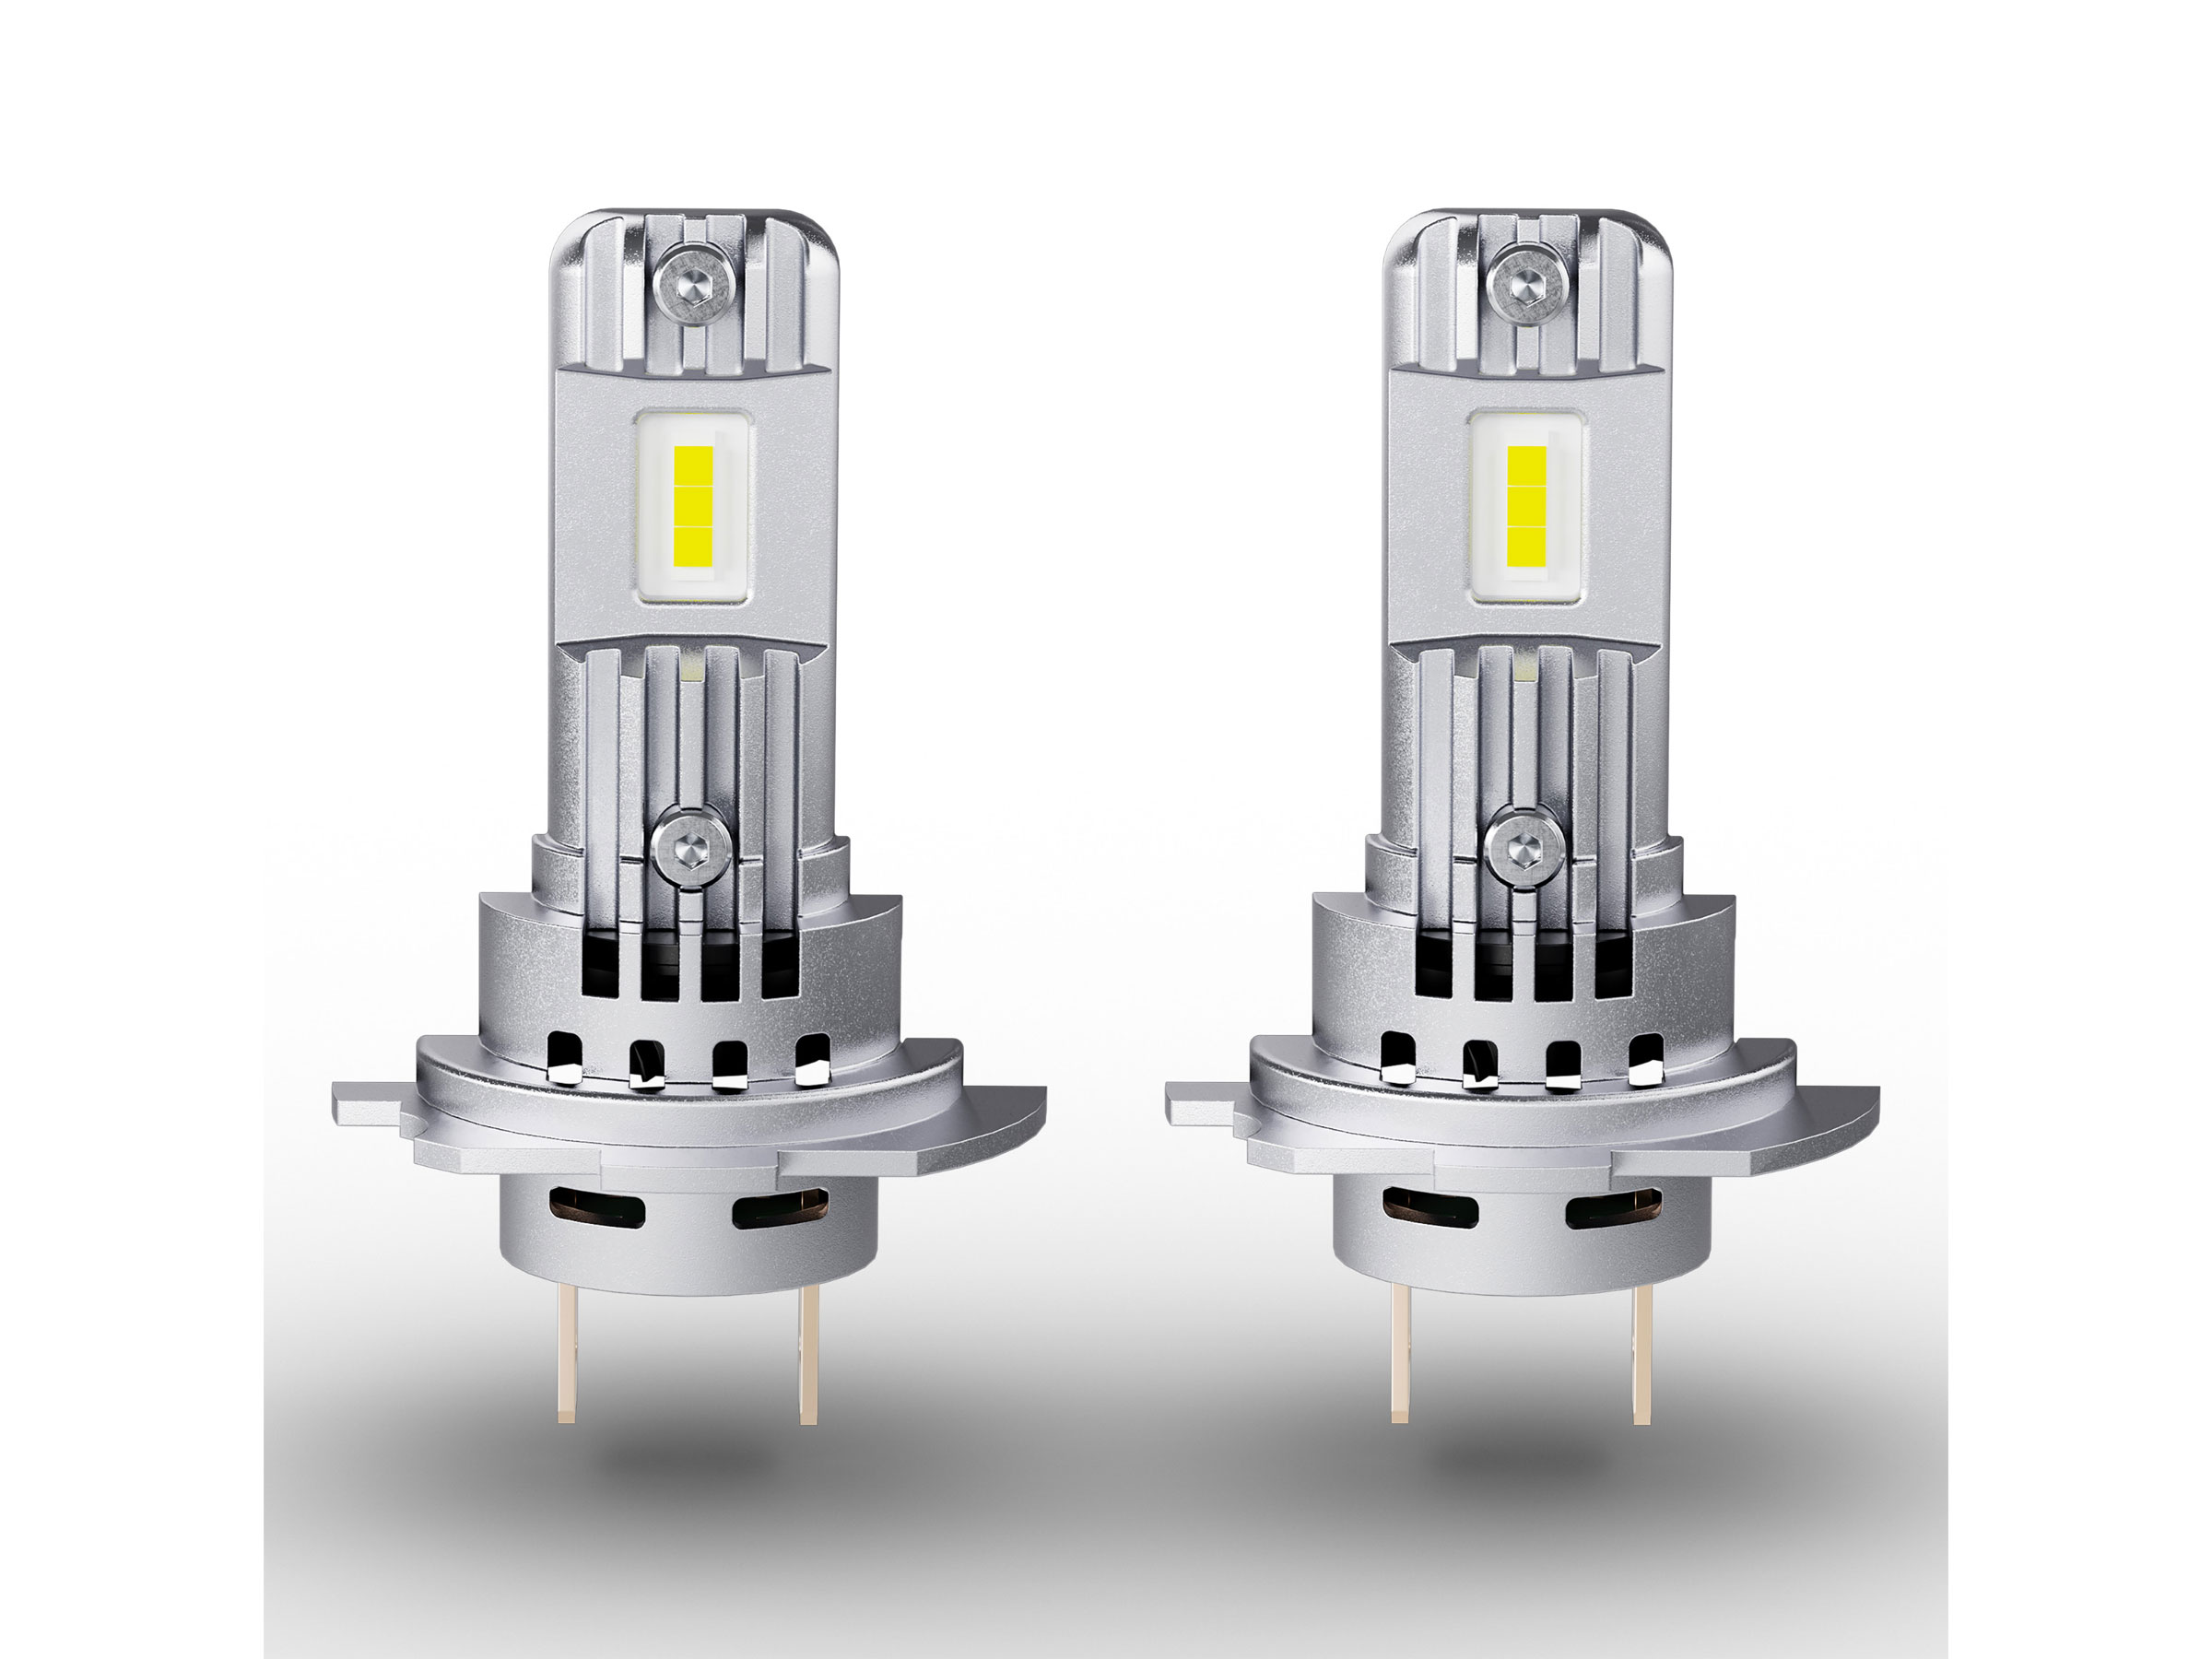 OSRAM LEDriving LED Abblendlicht EASY H7 / H18 12V 16.2W PX26d/PY26d-1  6000K - 64210DWESY-HCB